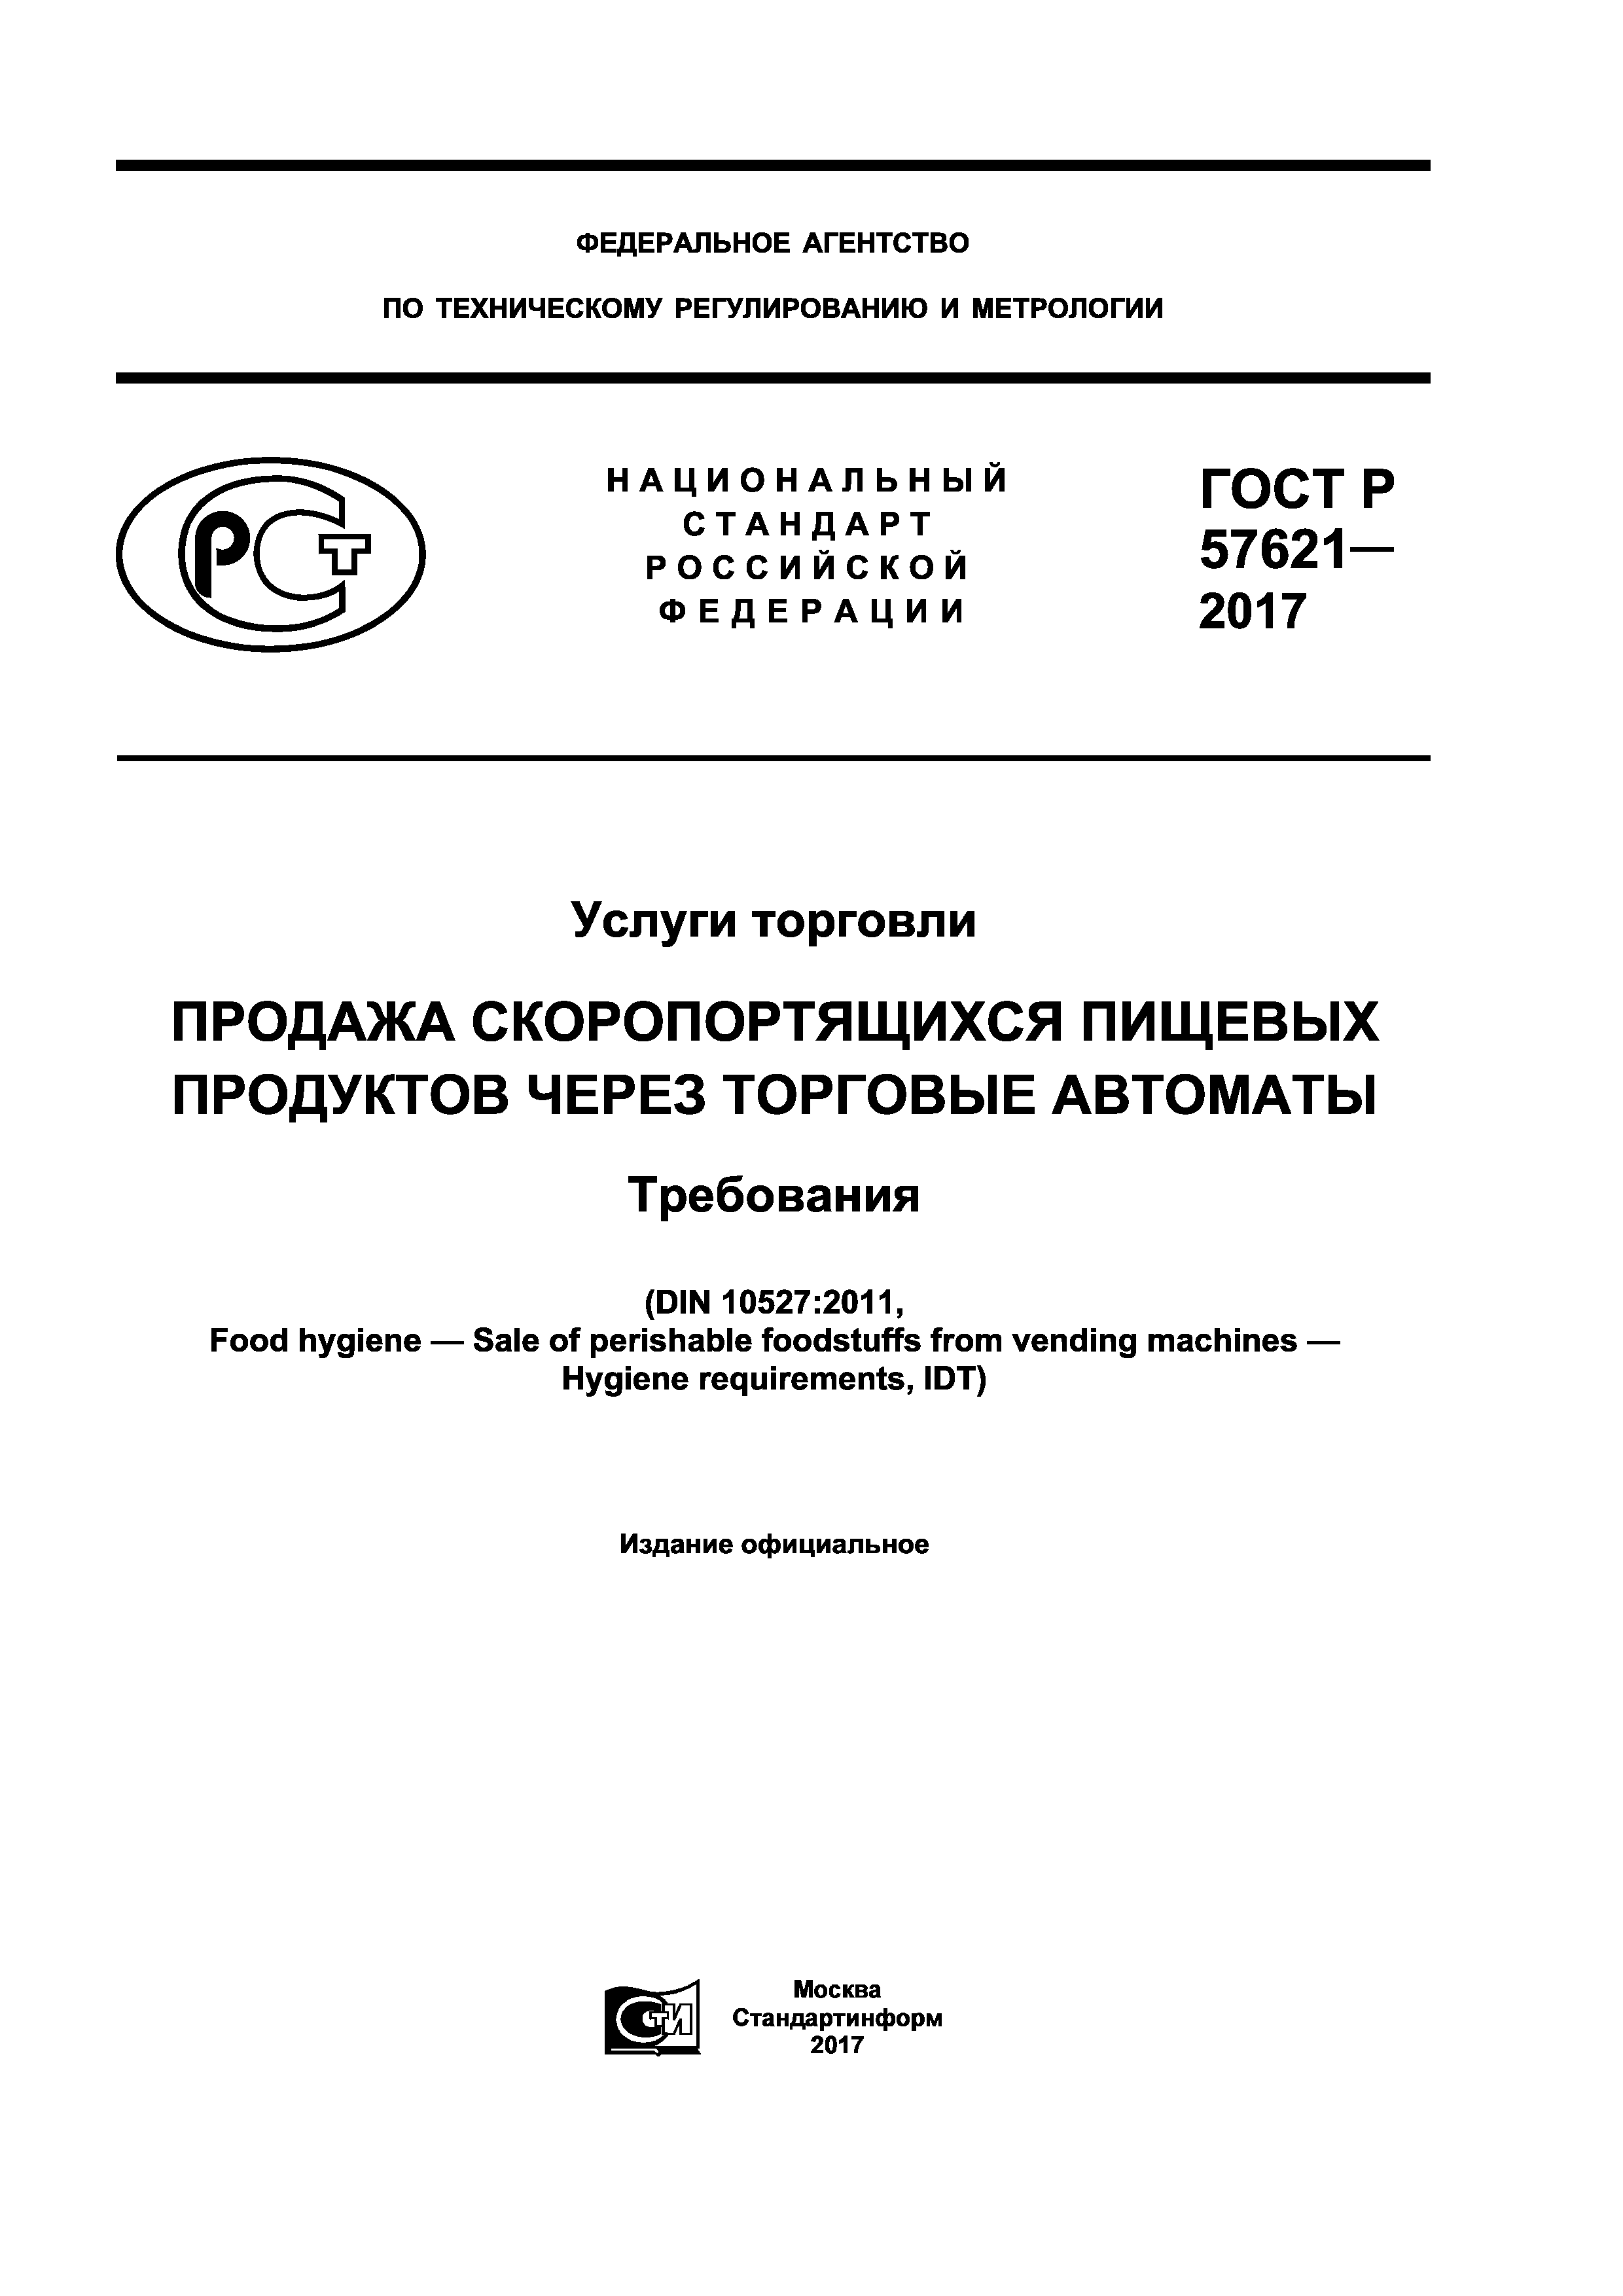 ГОСТ Р 57621-2017